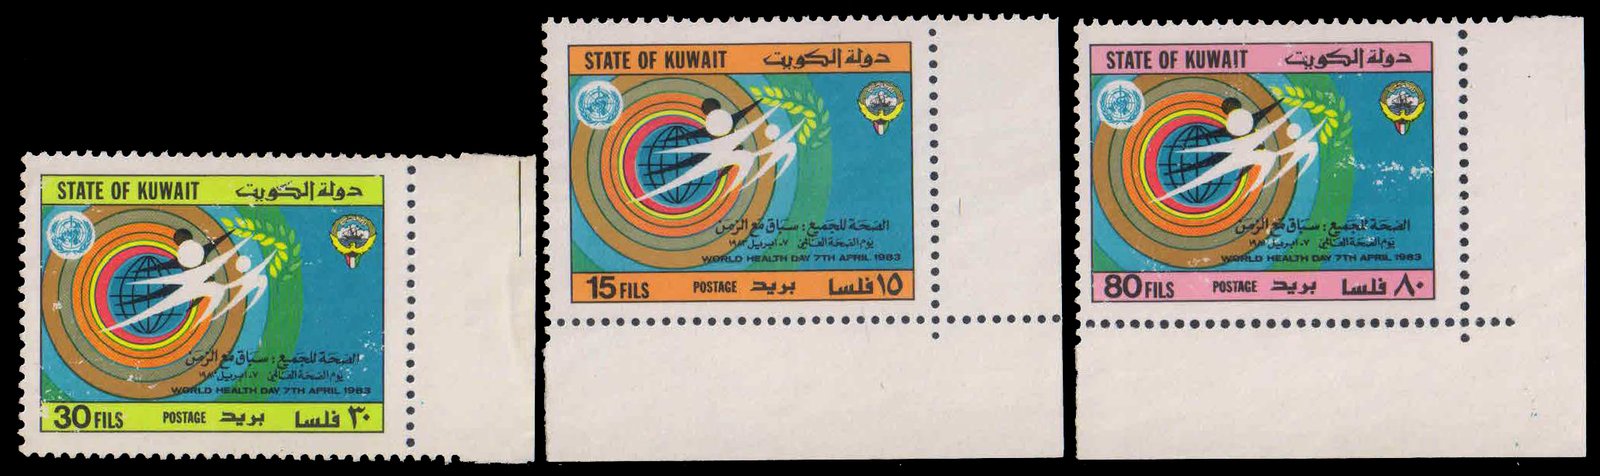 KUWAIT 1983-World Health Day, Figures, Medical, Exercising, Set of 3, MNH, S.G. 1003-05-Cat � 7-